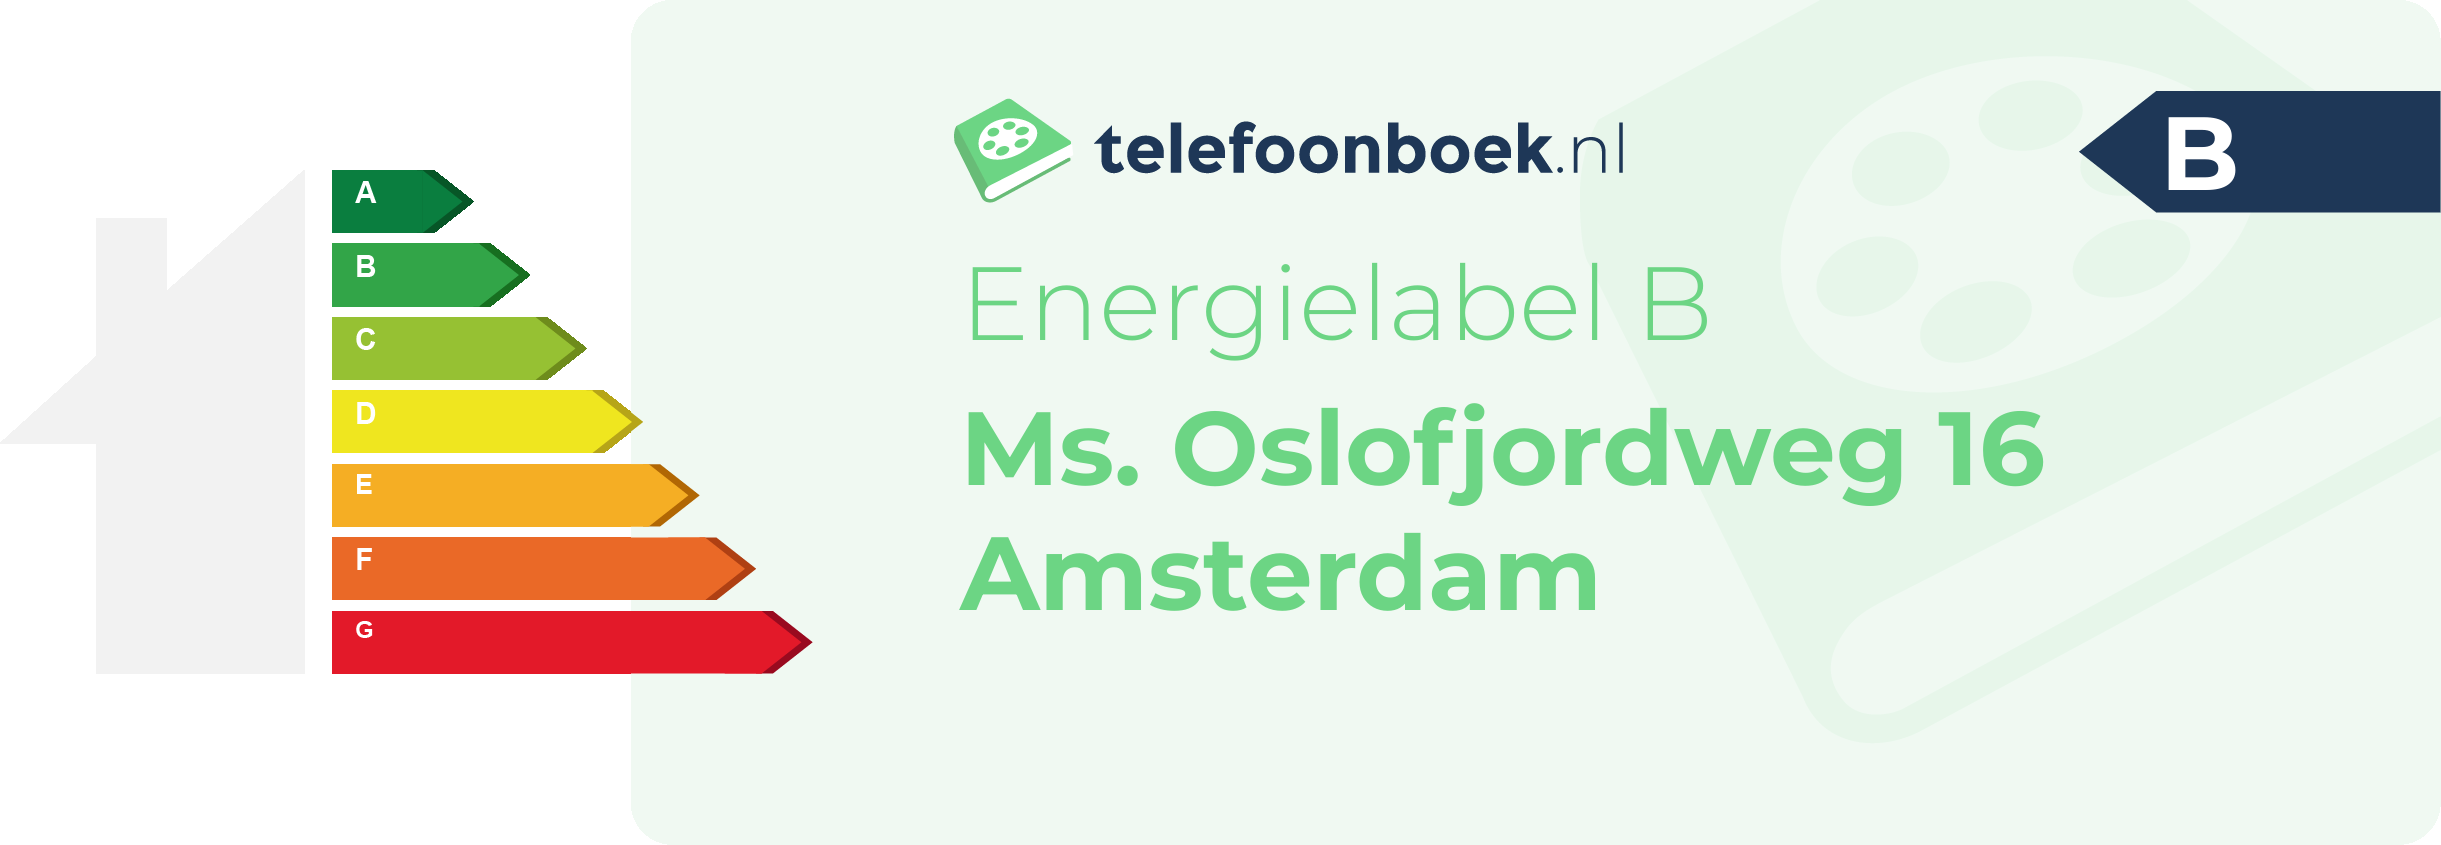 Energielabel Ms. Oslofjordweg 16 Amsterdam